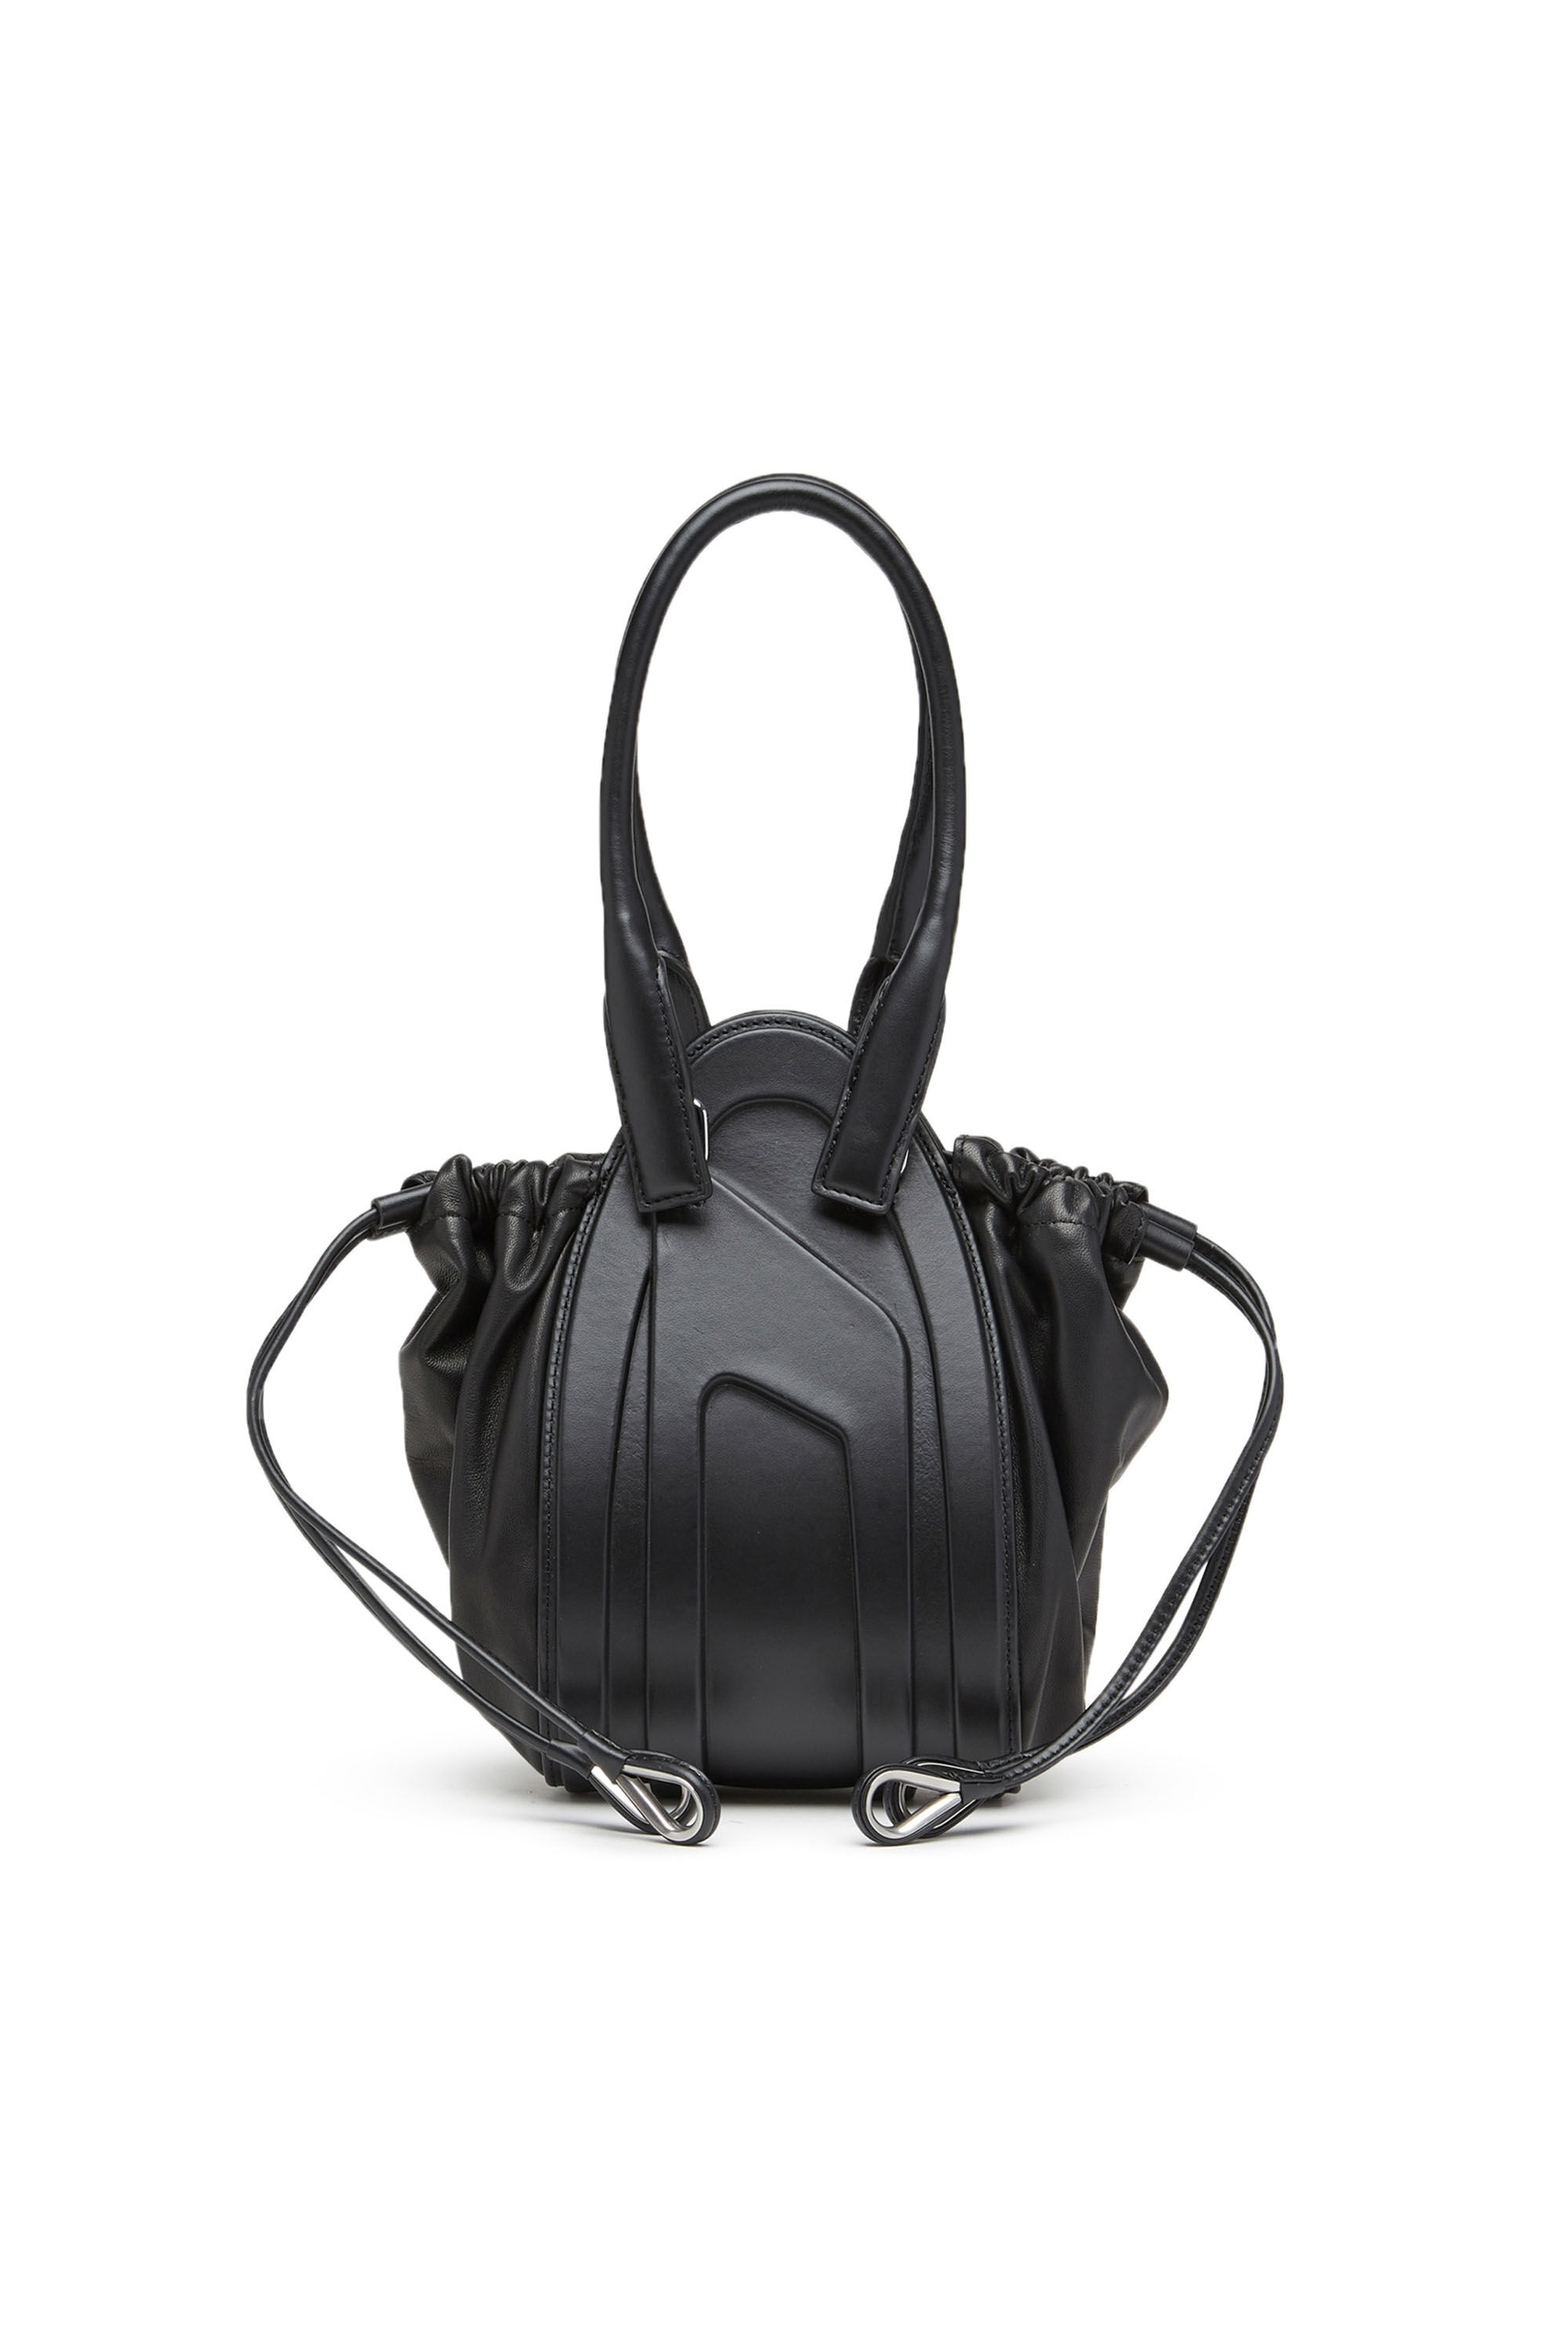 Diesel - 1DR-FOLD XS, Woman 1DR-Fold XS-Oval logo handbag in nappa leather in Black - Image 3